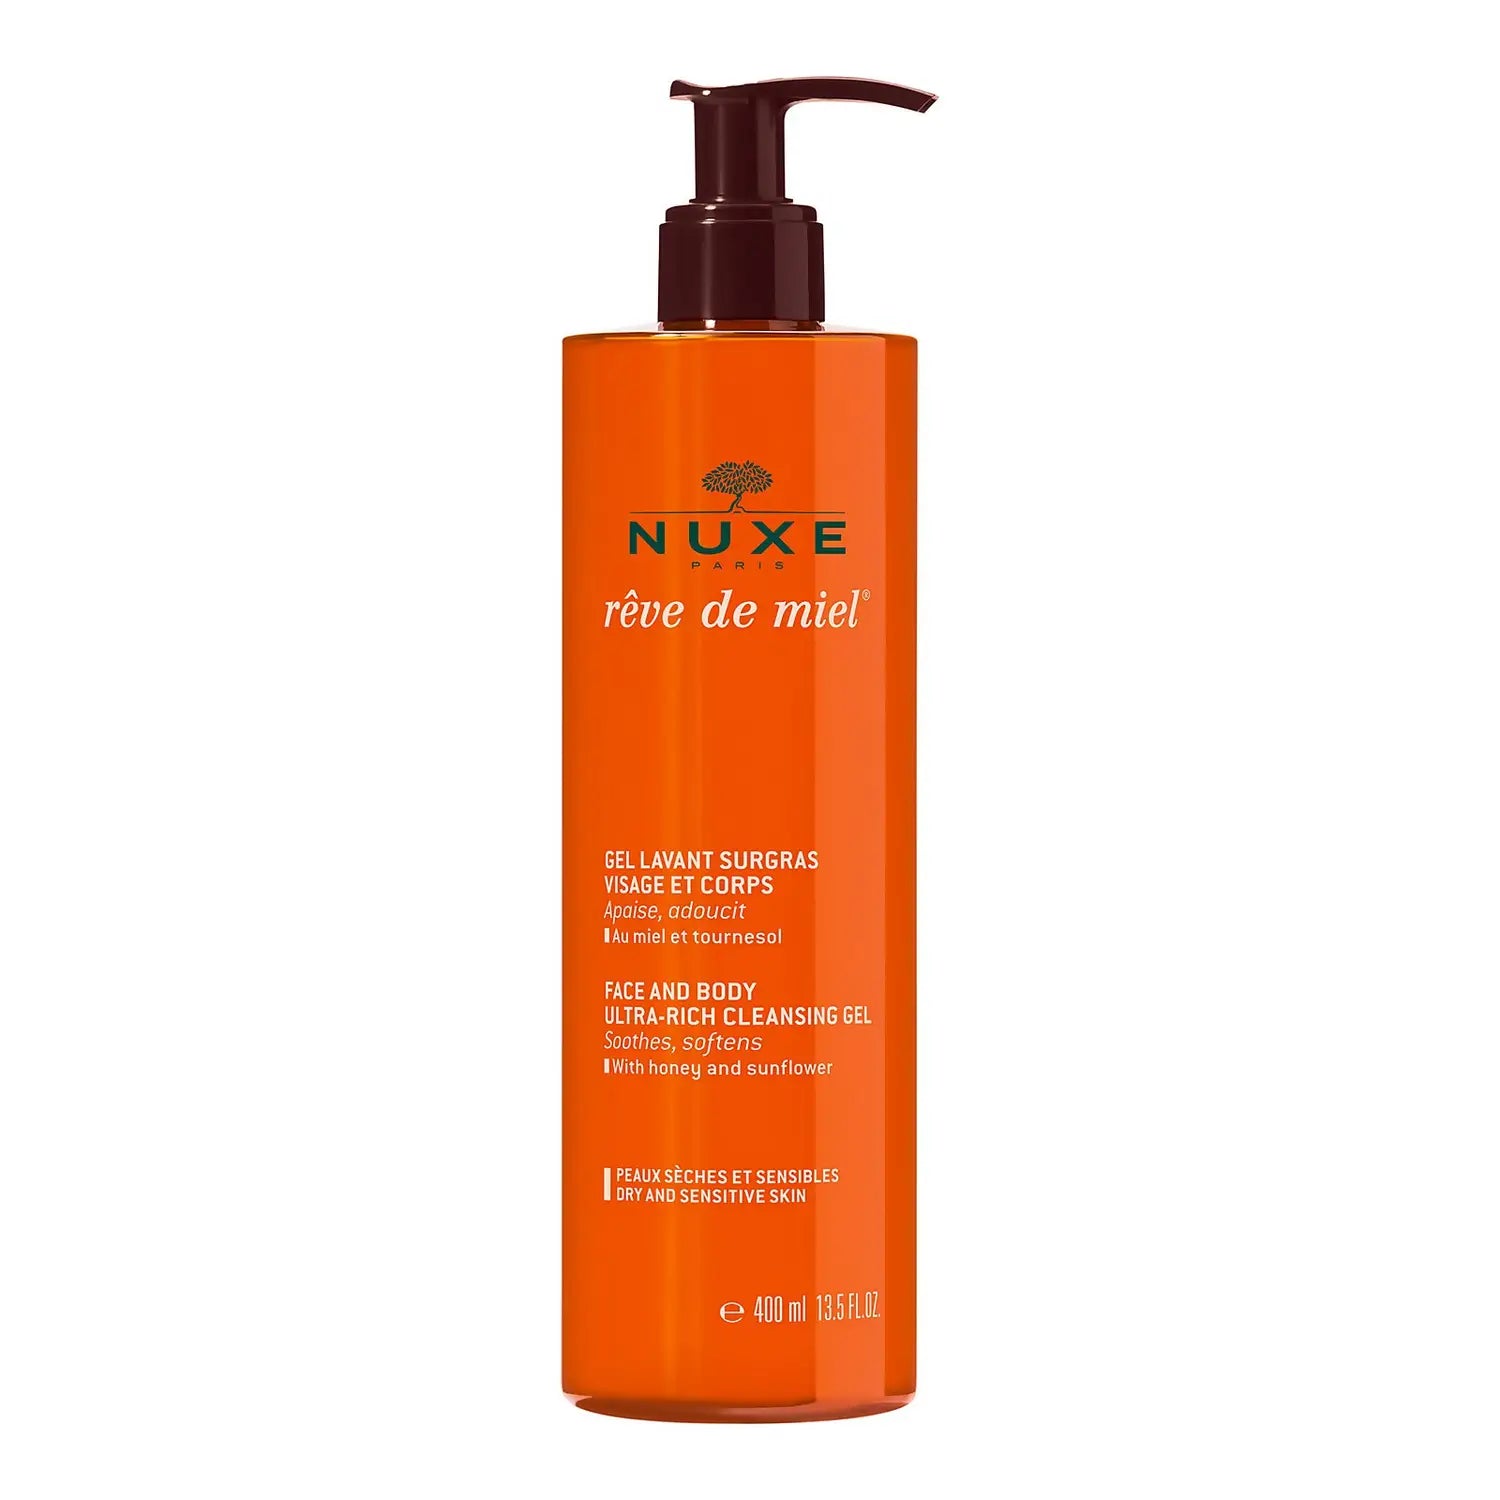 Nuxe Face & Body Cleansing Gel, Rêve de Miel 400 ml